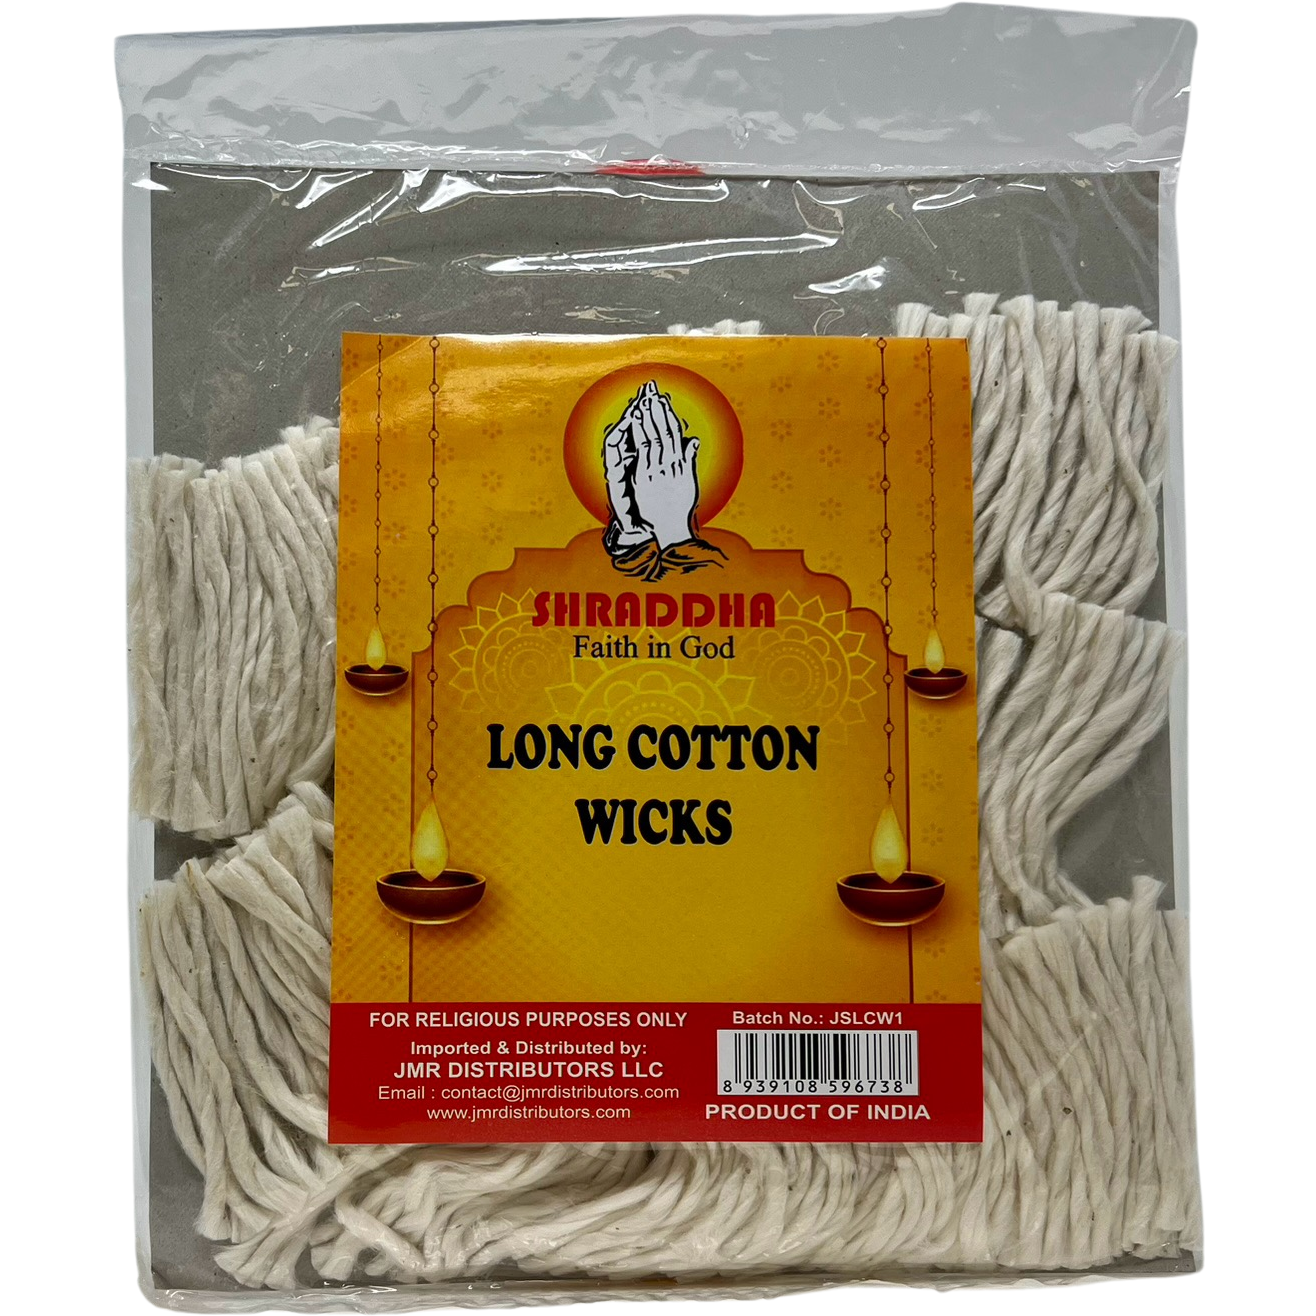 Long cotton wicks